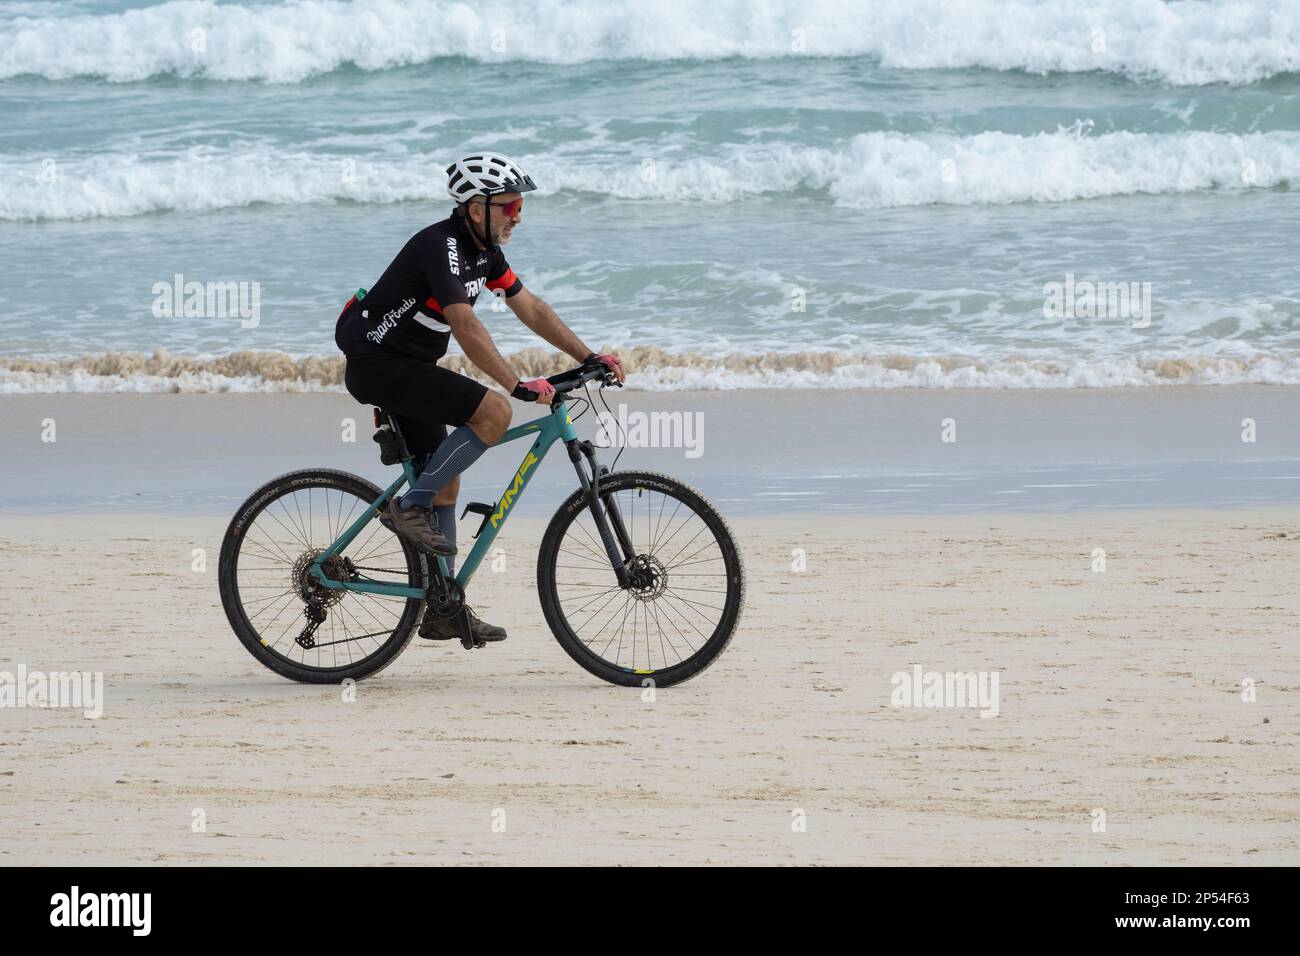 Man riding bike, bicycle on beach Stock Photo